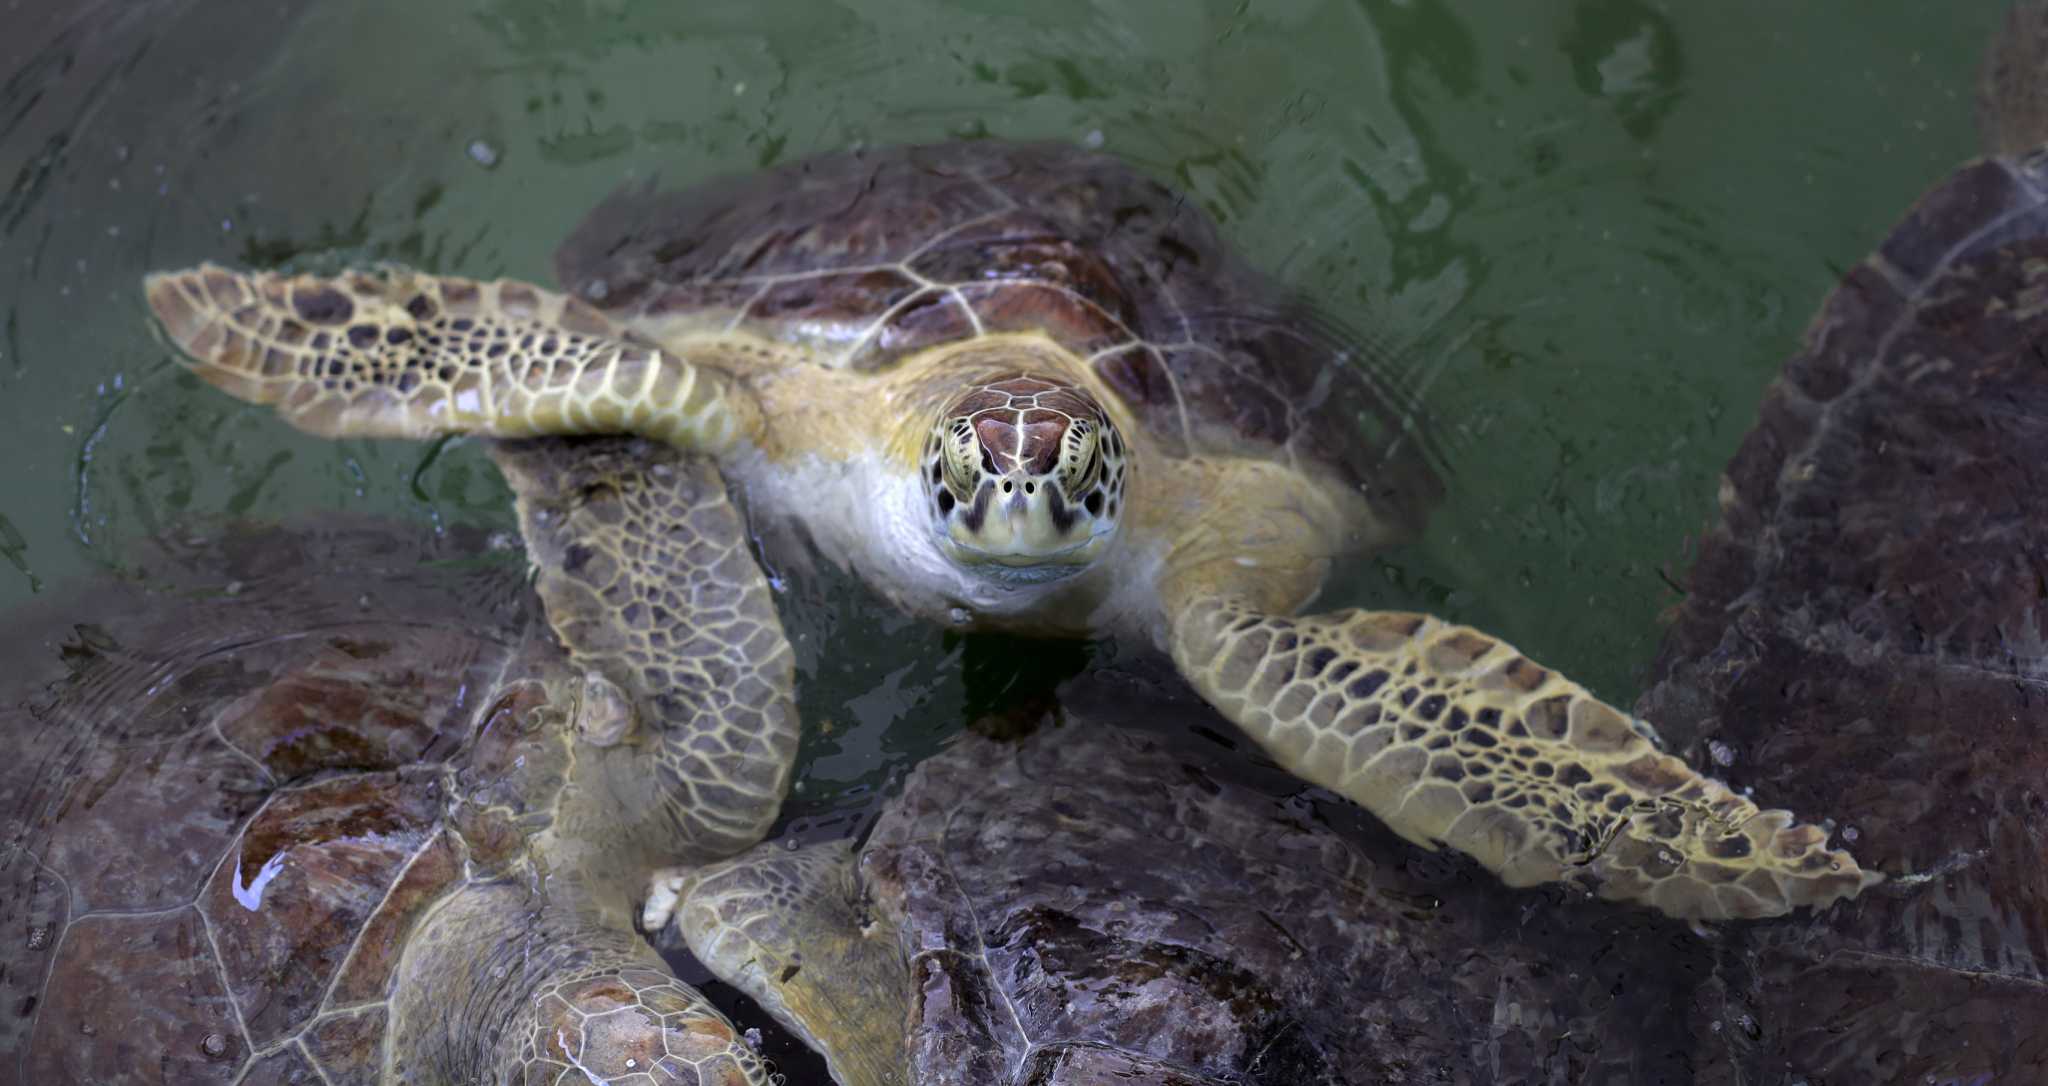 Texas A&M to build special hospital for rare, adorable sea turtles